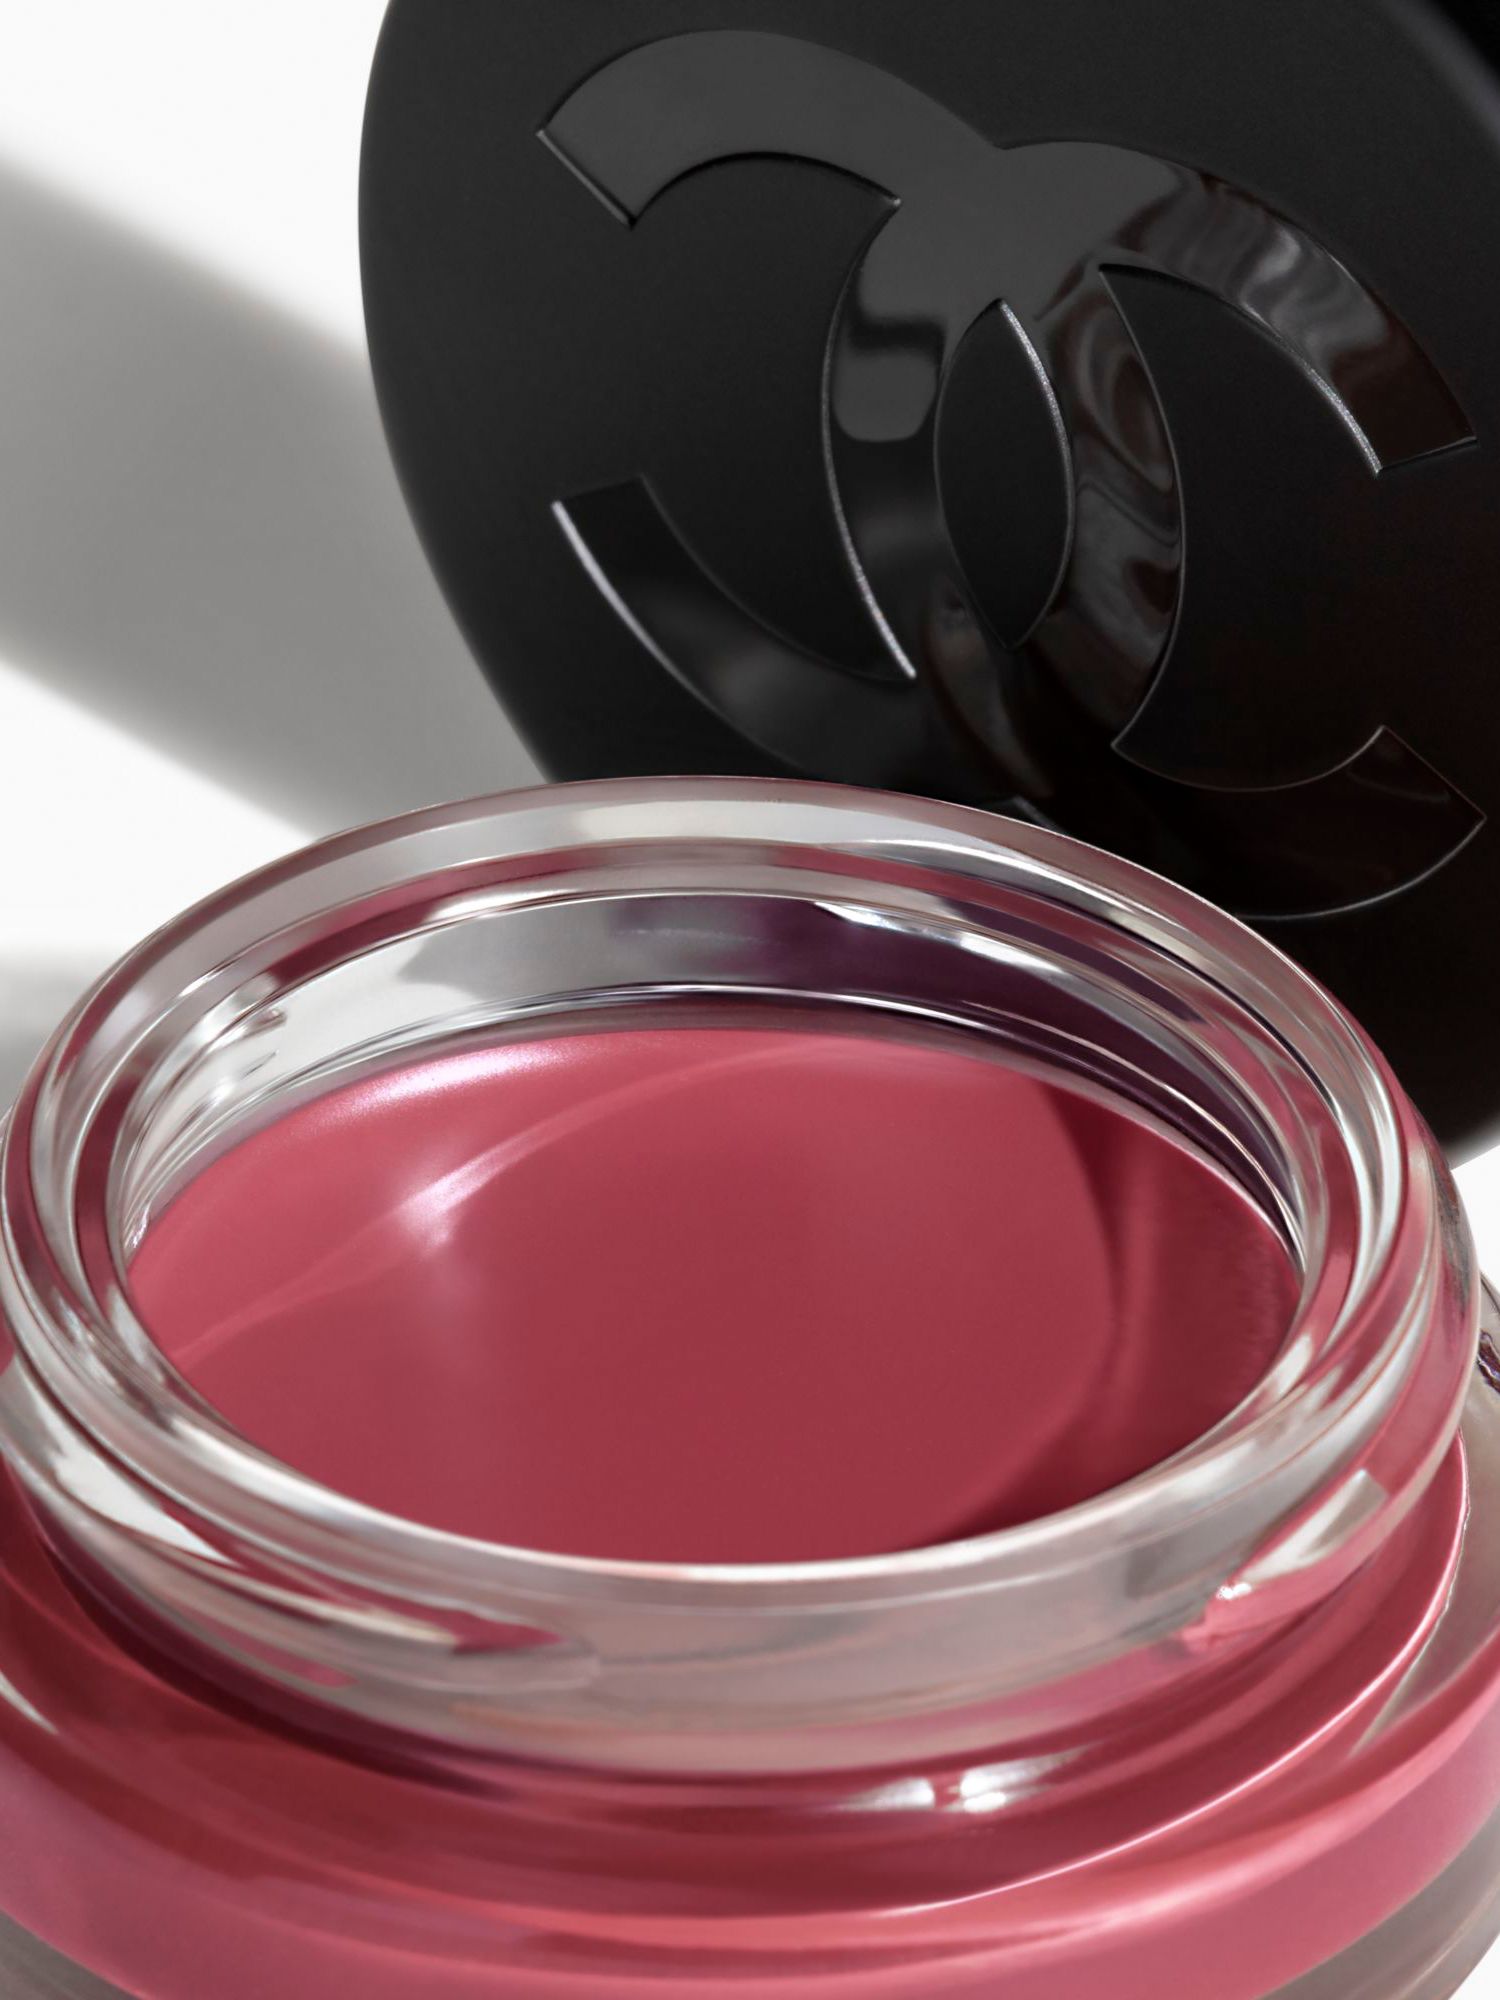 CHANEL N°1 De CHANEL Lip And Cheek Balm Enhances Colour - Nourishes -  Plumps, 6 Berry Boost at John Lewis & Partners